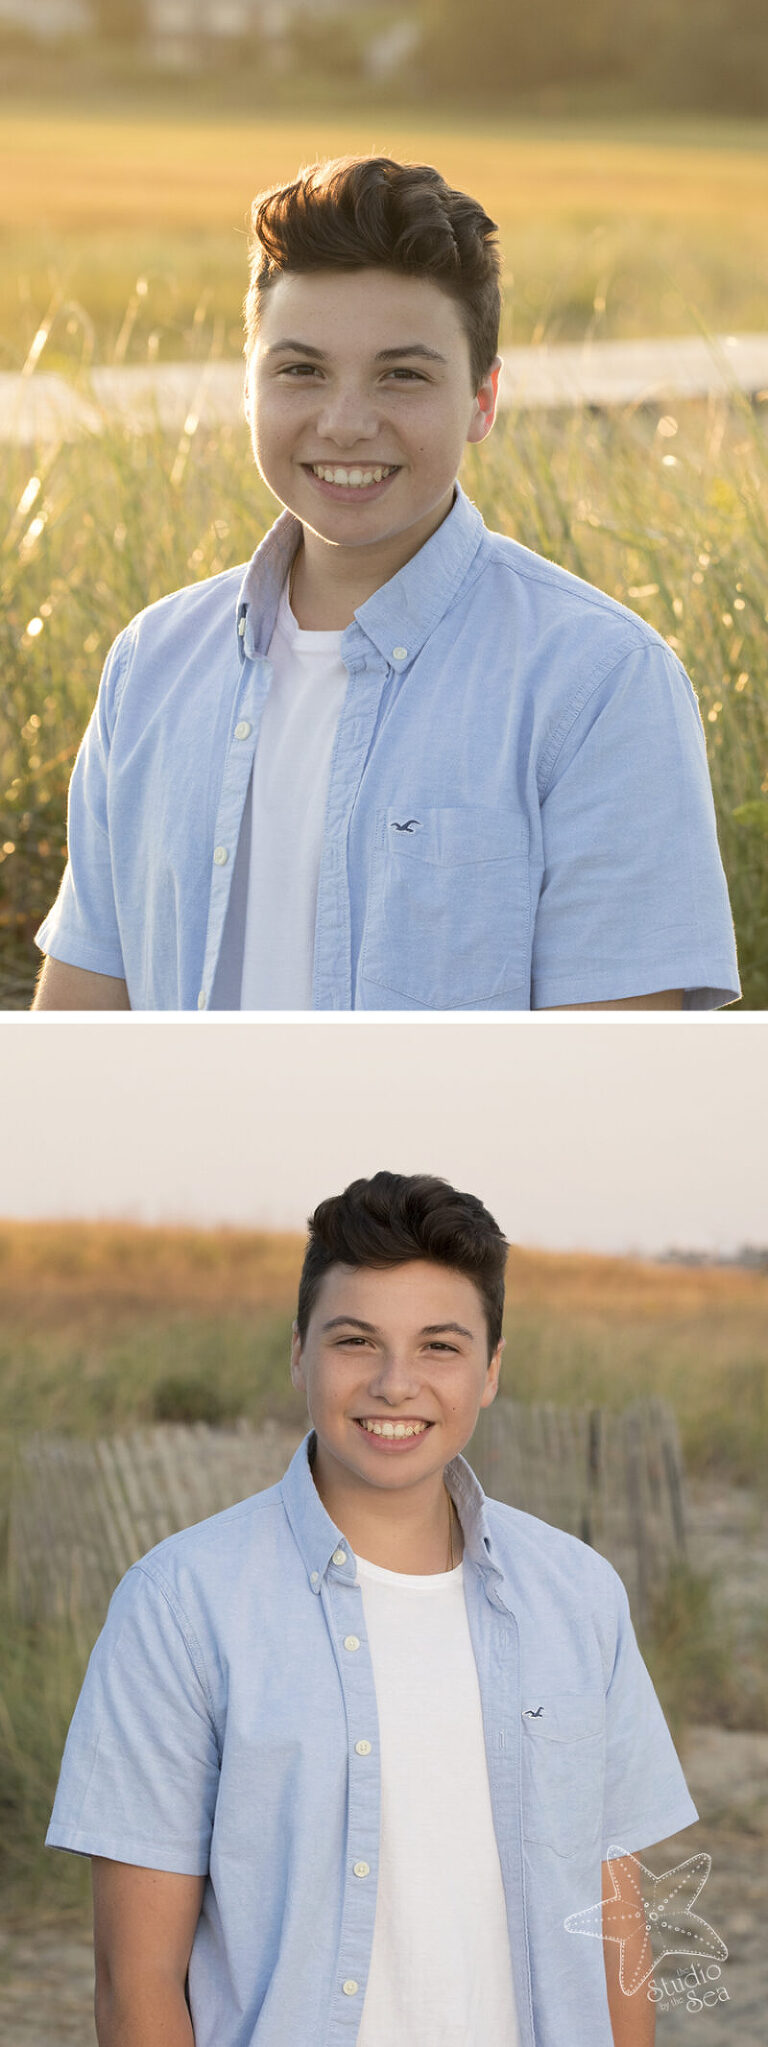 2 image composite of smiley senior boy in marsh 